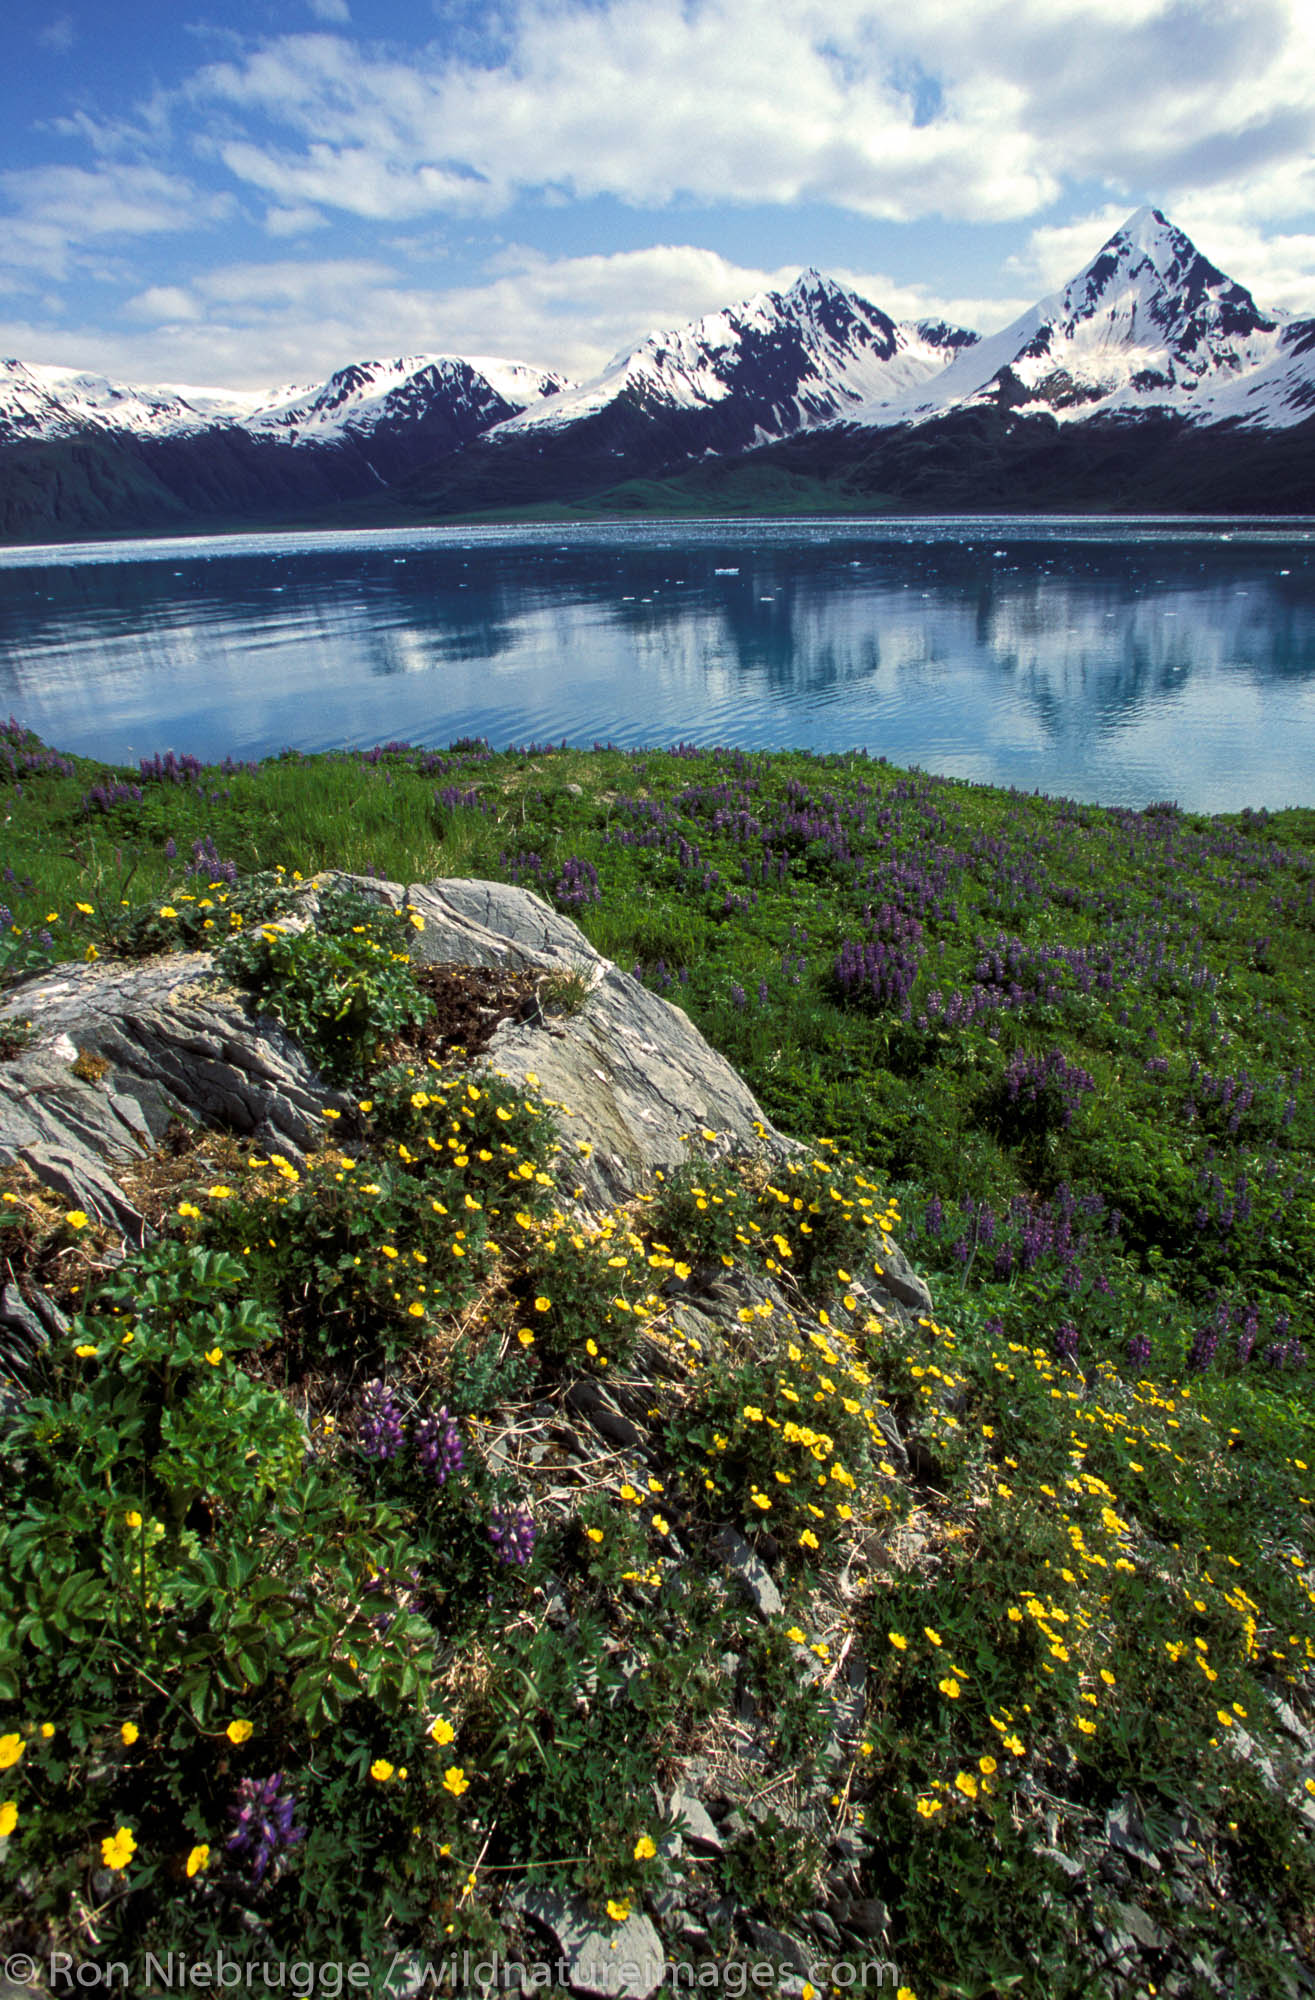 Slate Island in Aialik Bay, Kenai Fjords National Park, Alaska.